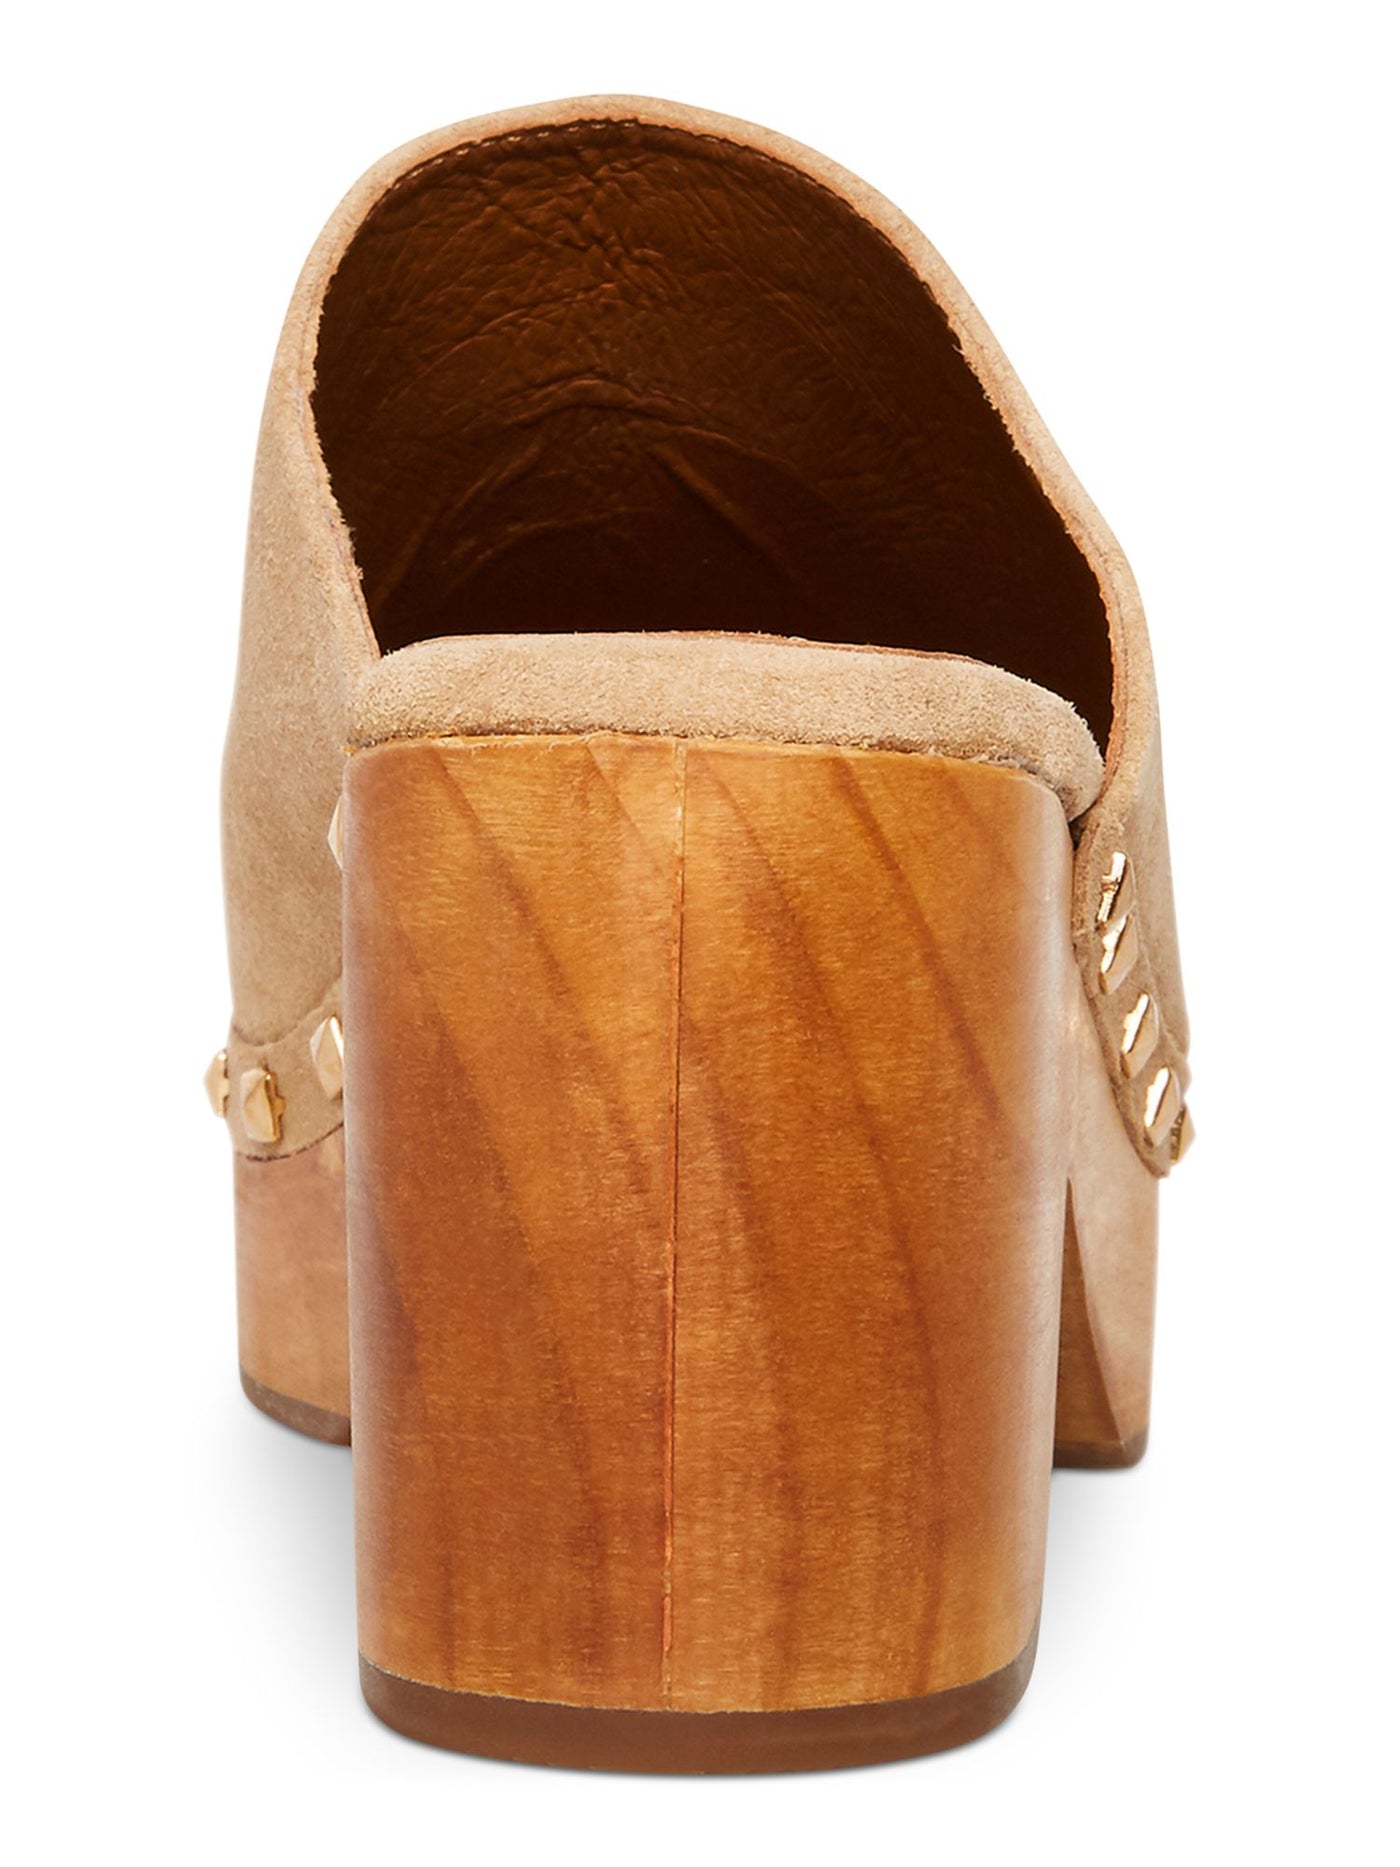 STEVE MADDEN Womens Bone Beige 1.5 Wood Platform Studded Padded Brooklyn Round Toe Block Heel Slip On Leather Clogs Shoes 9 M